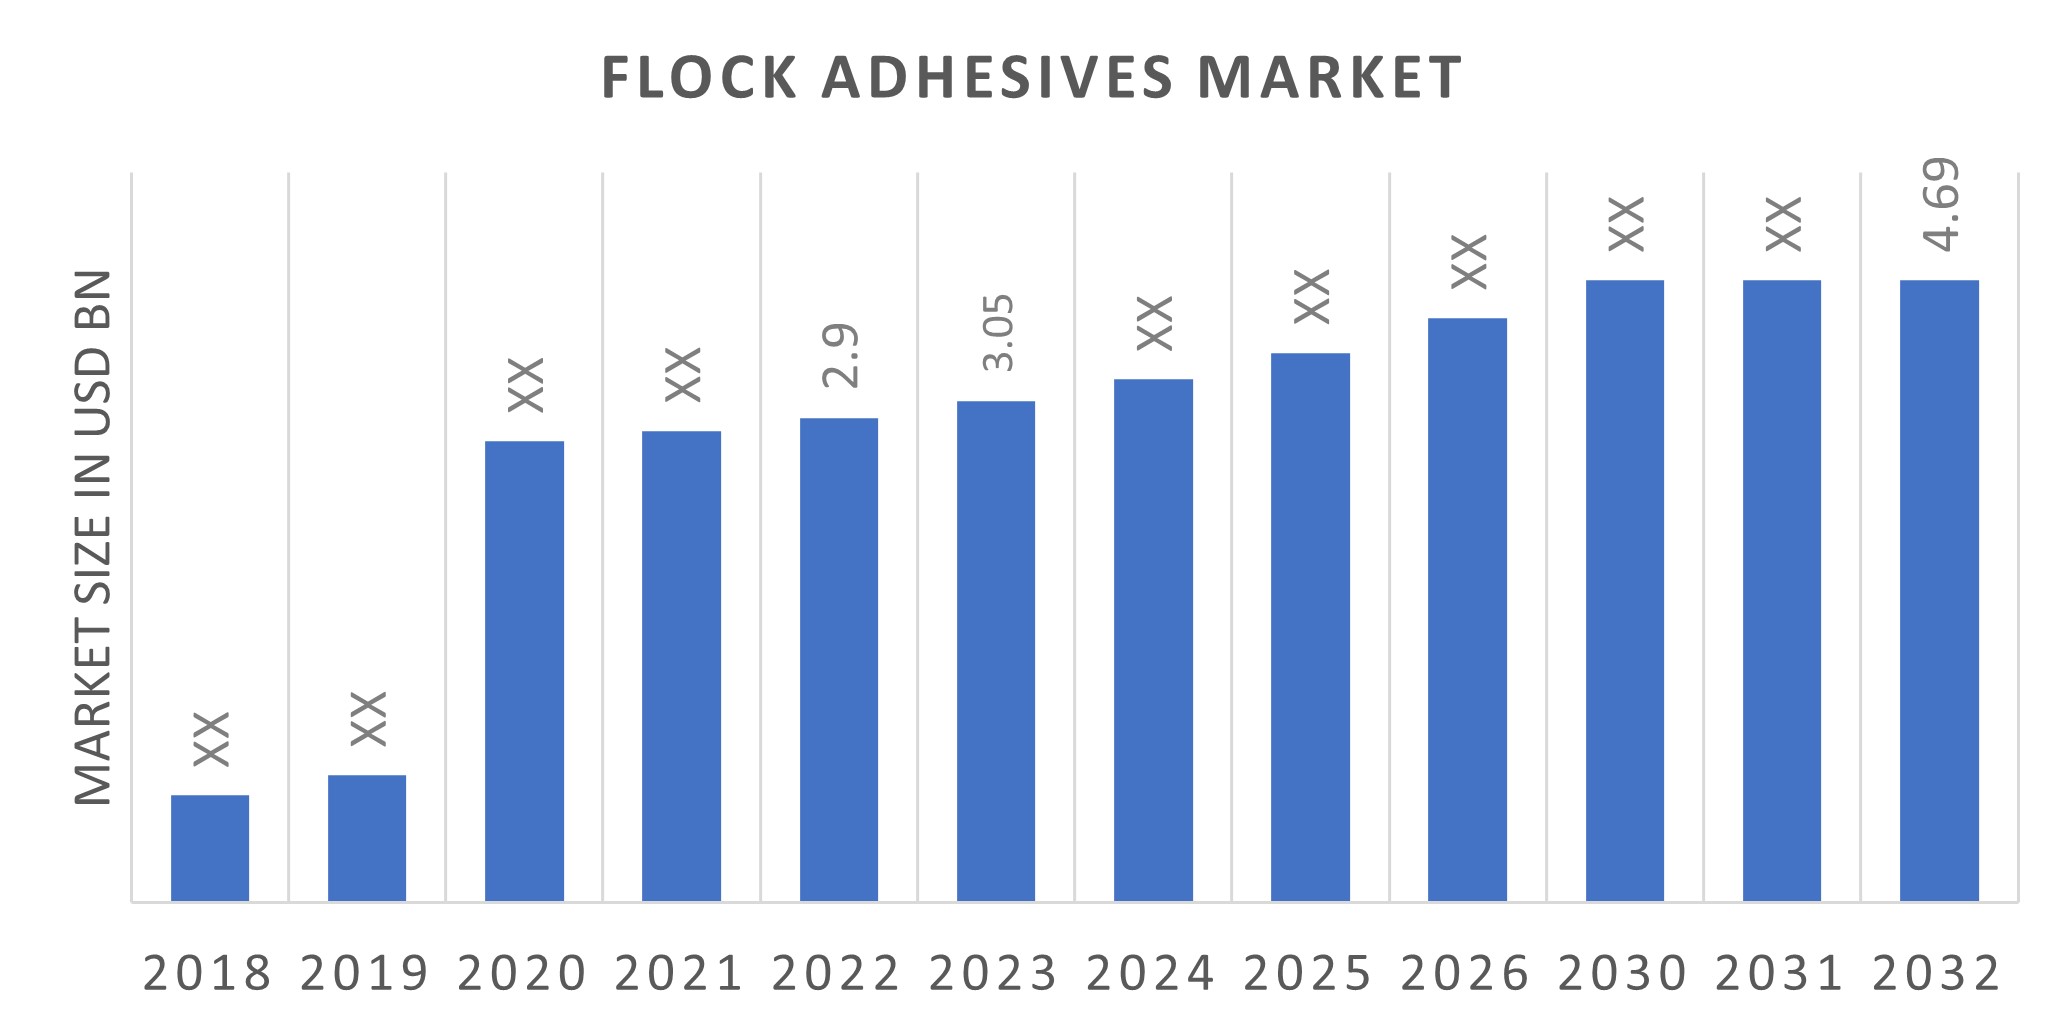 Flock Adhesives Market